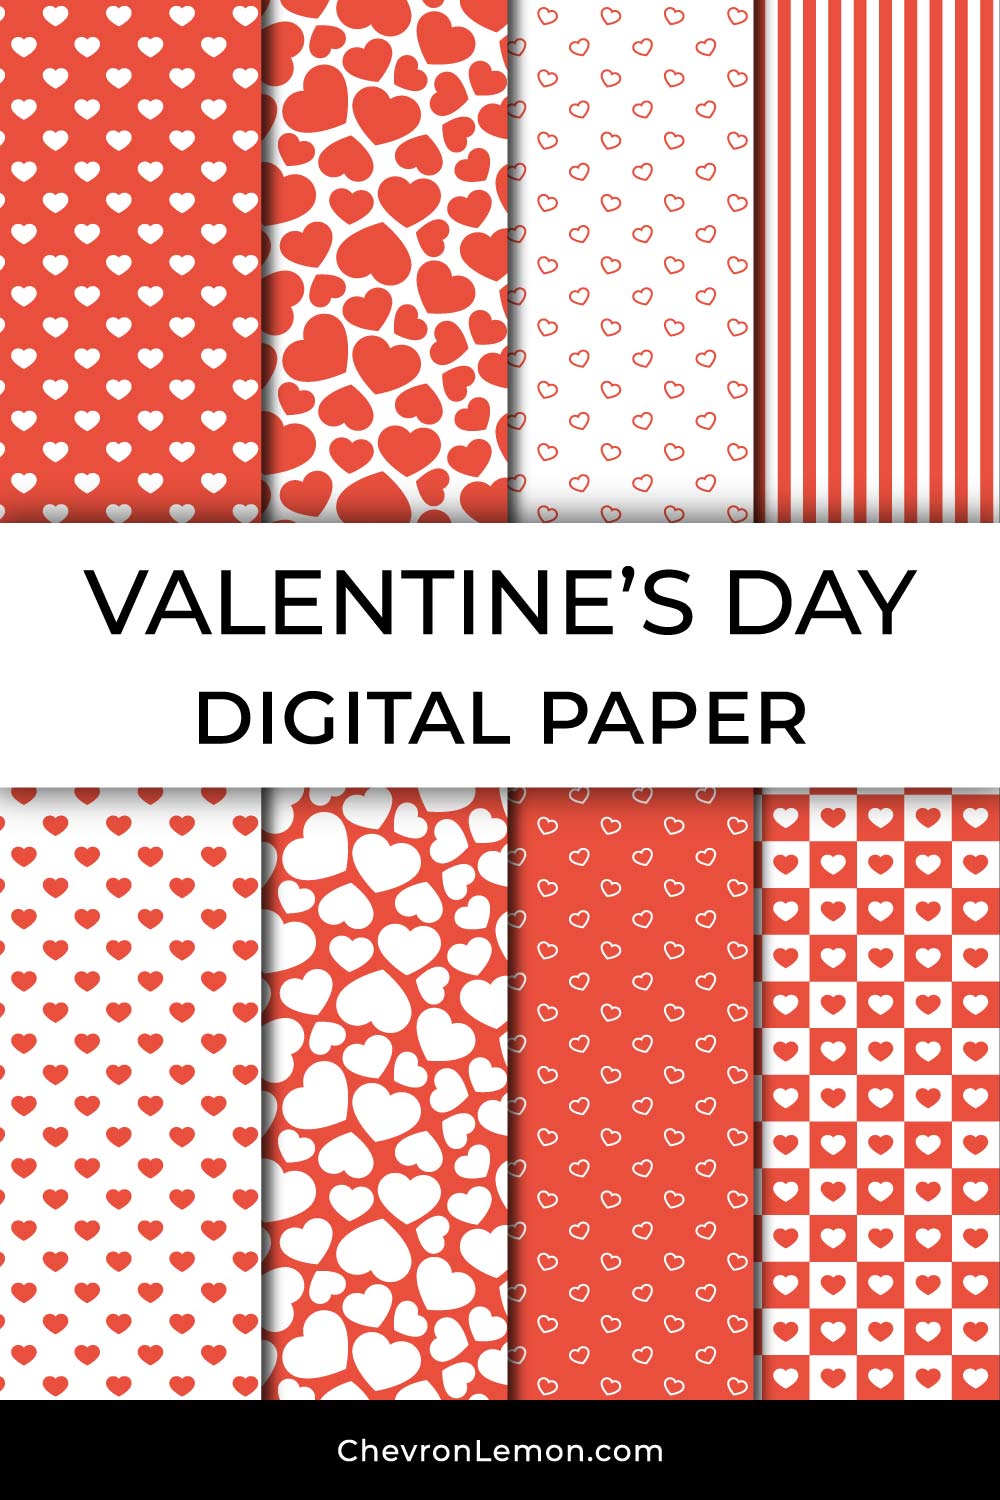 Valentine's day digital paper